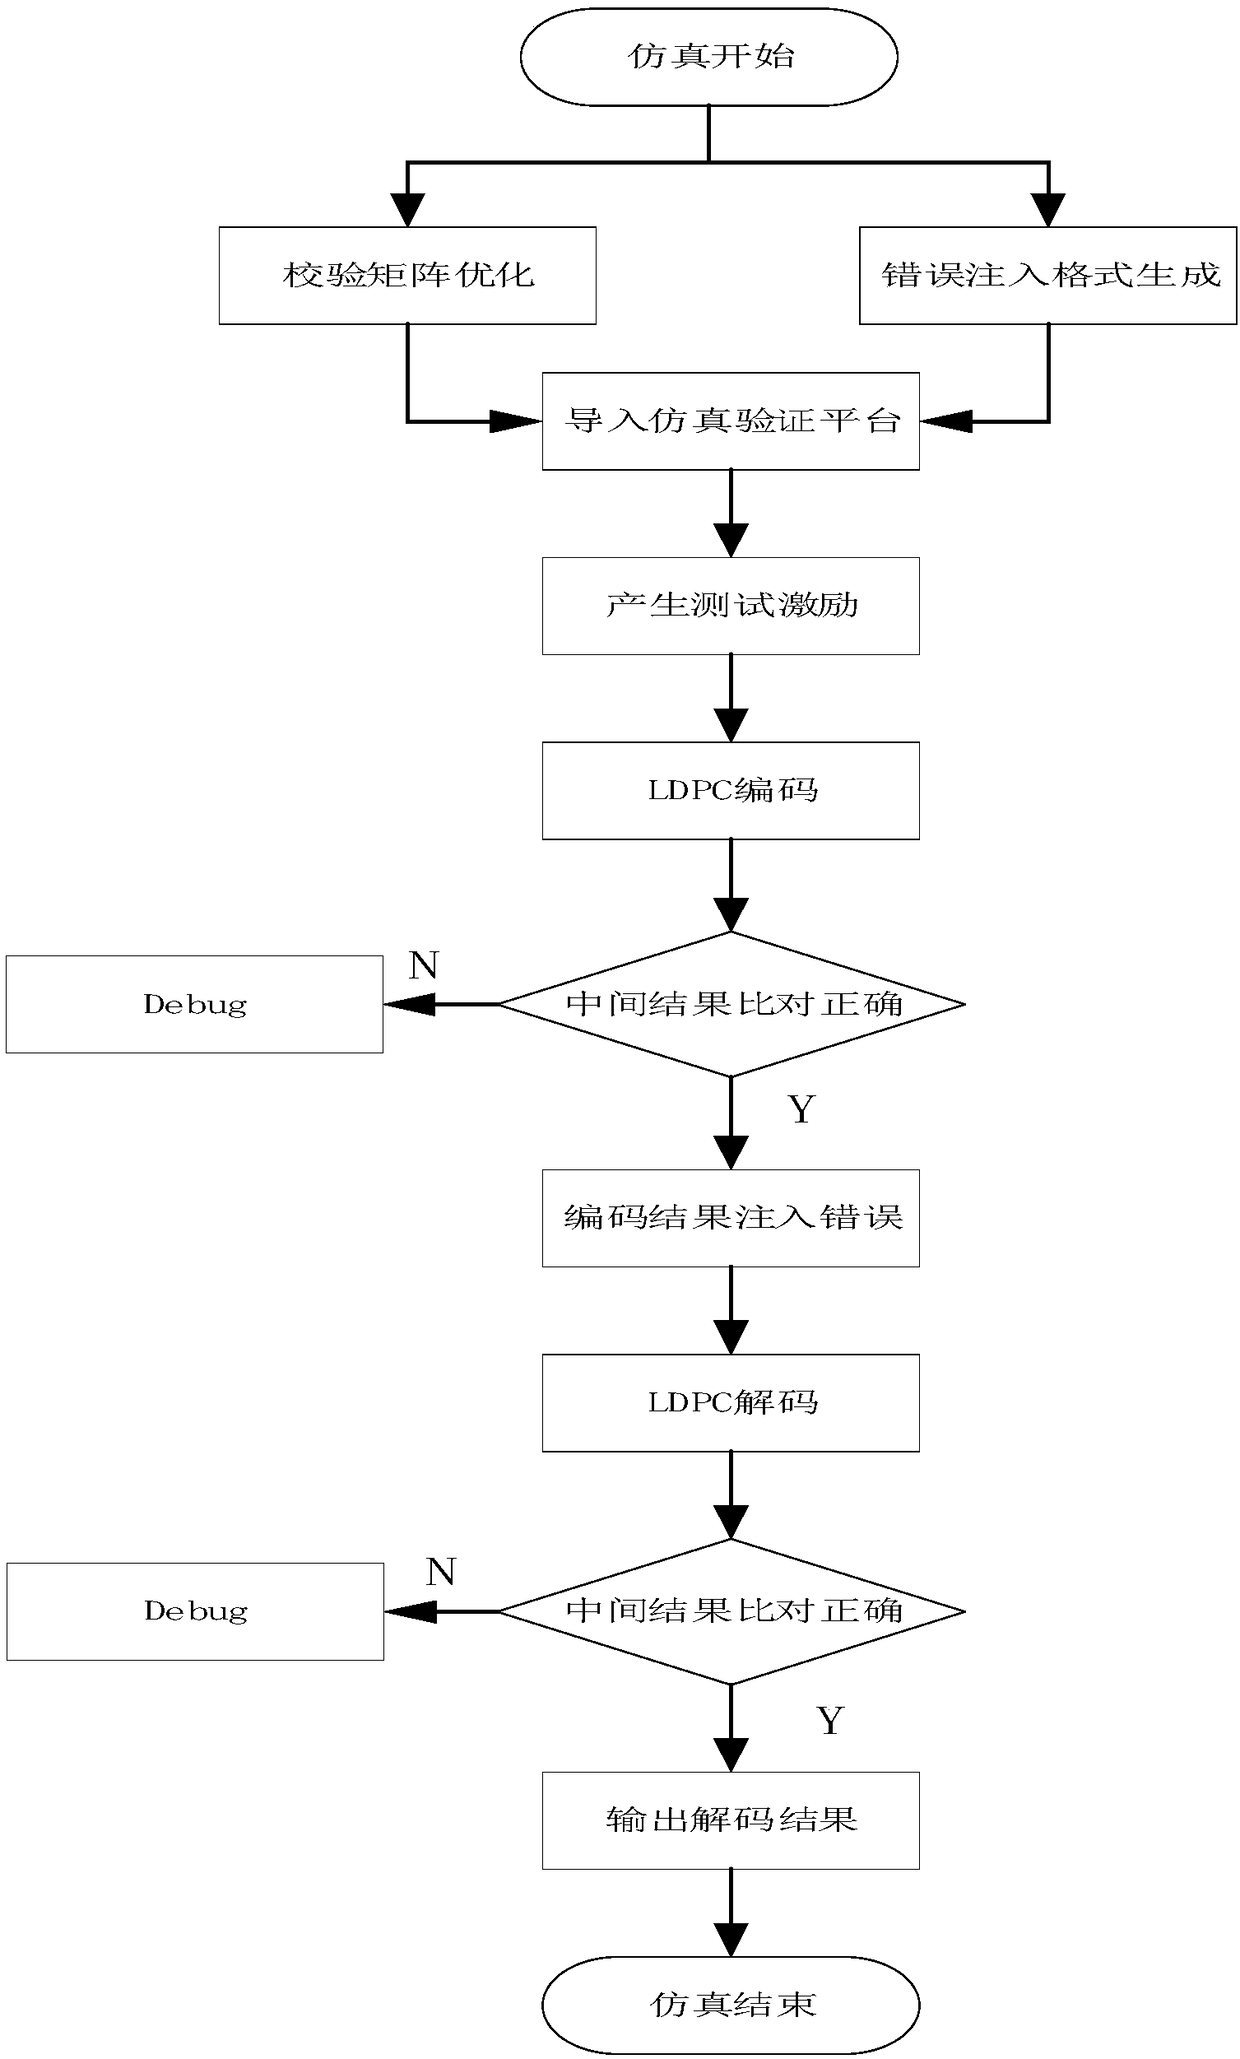 LDPC simulation verification platform and verification method